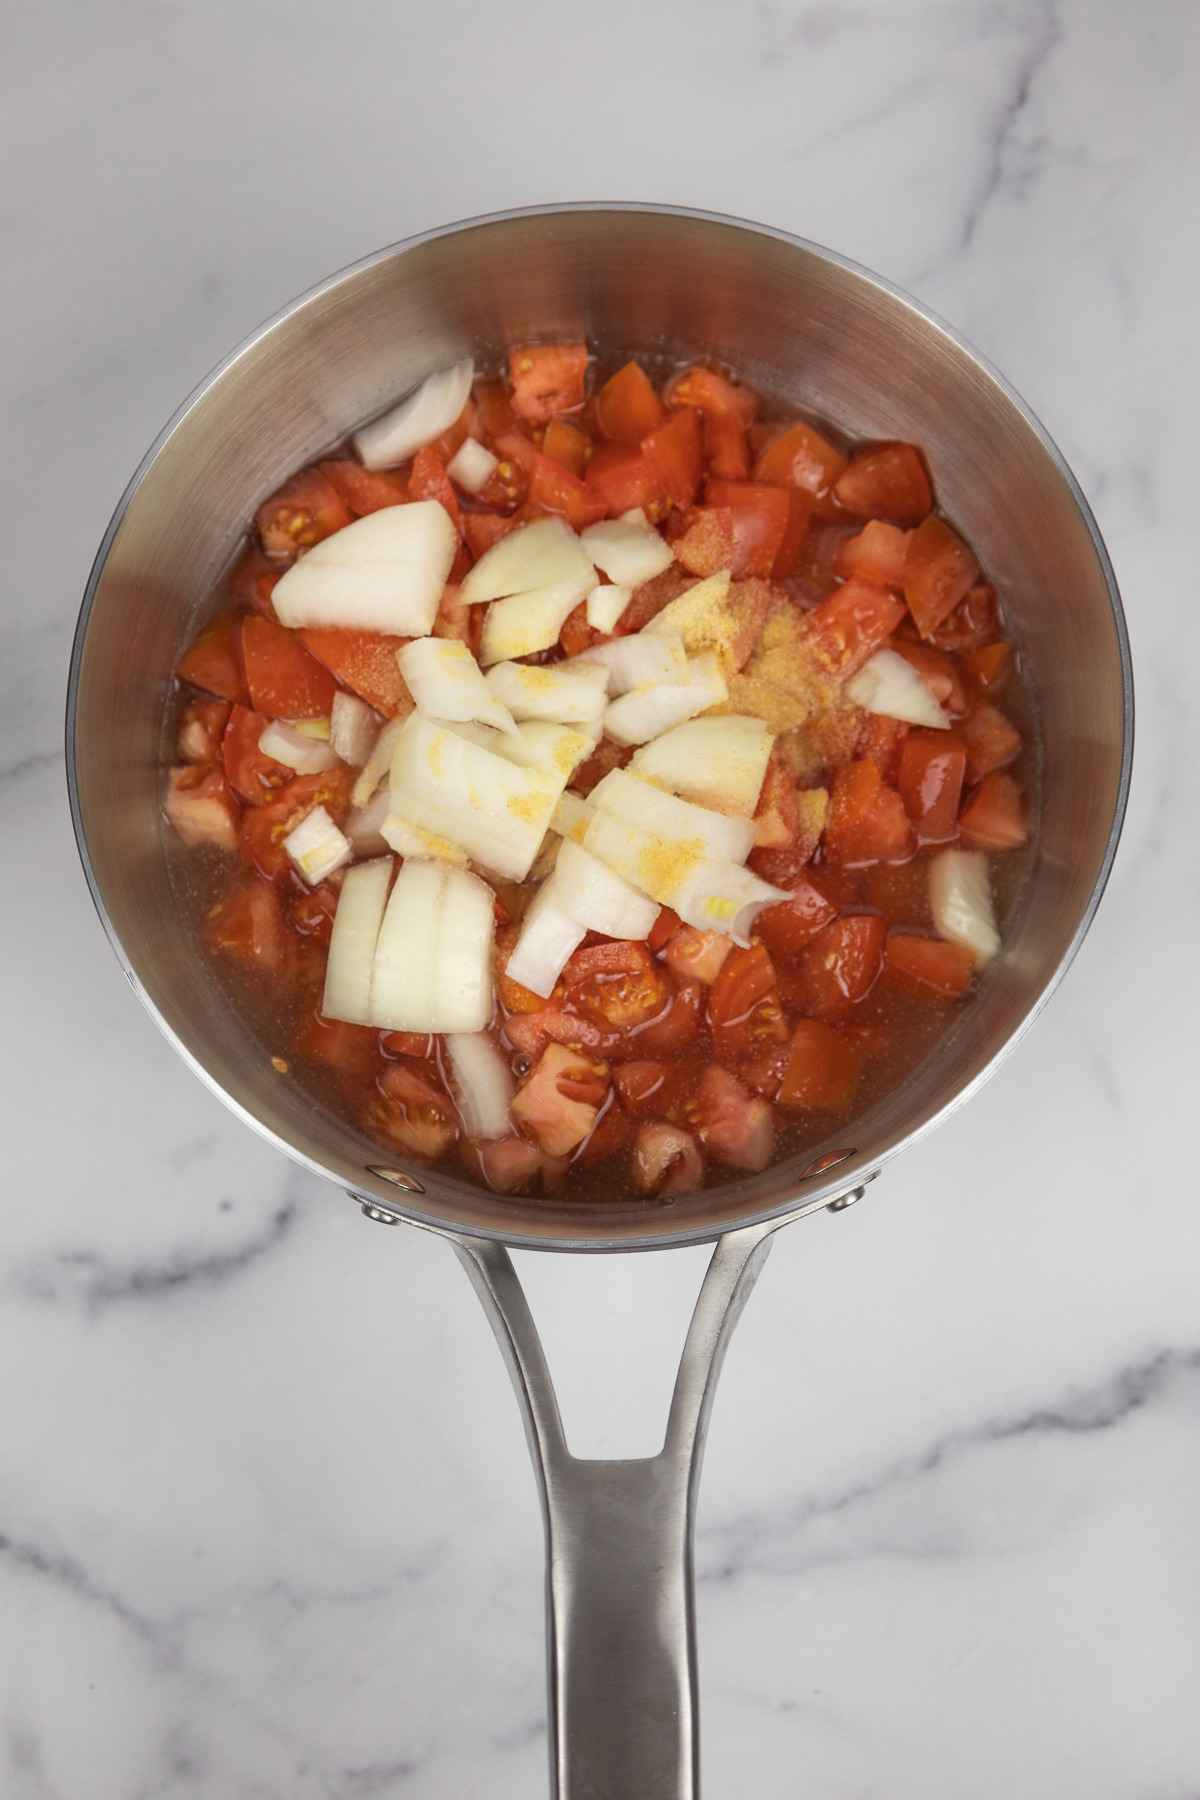 Tomatoes, onion, and garlic powder in a saucepan.